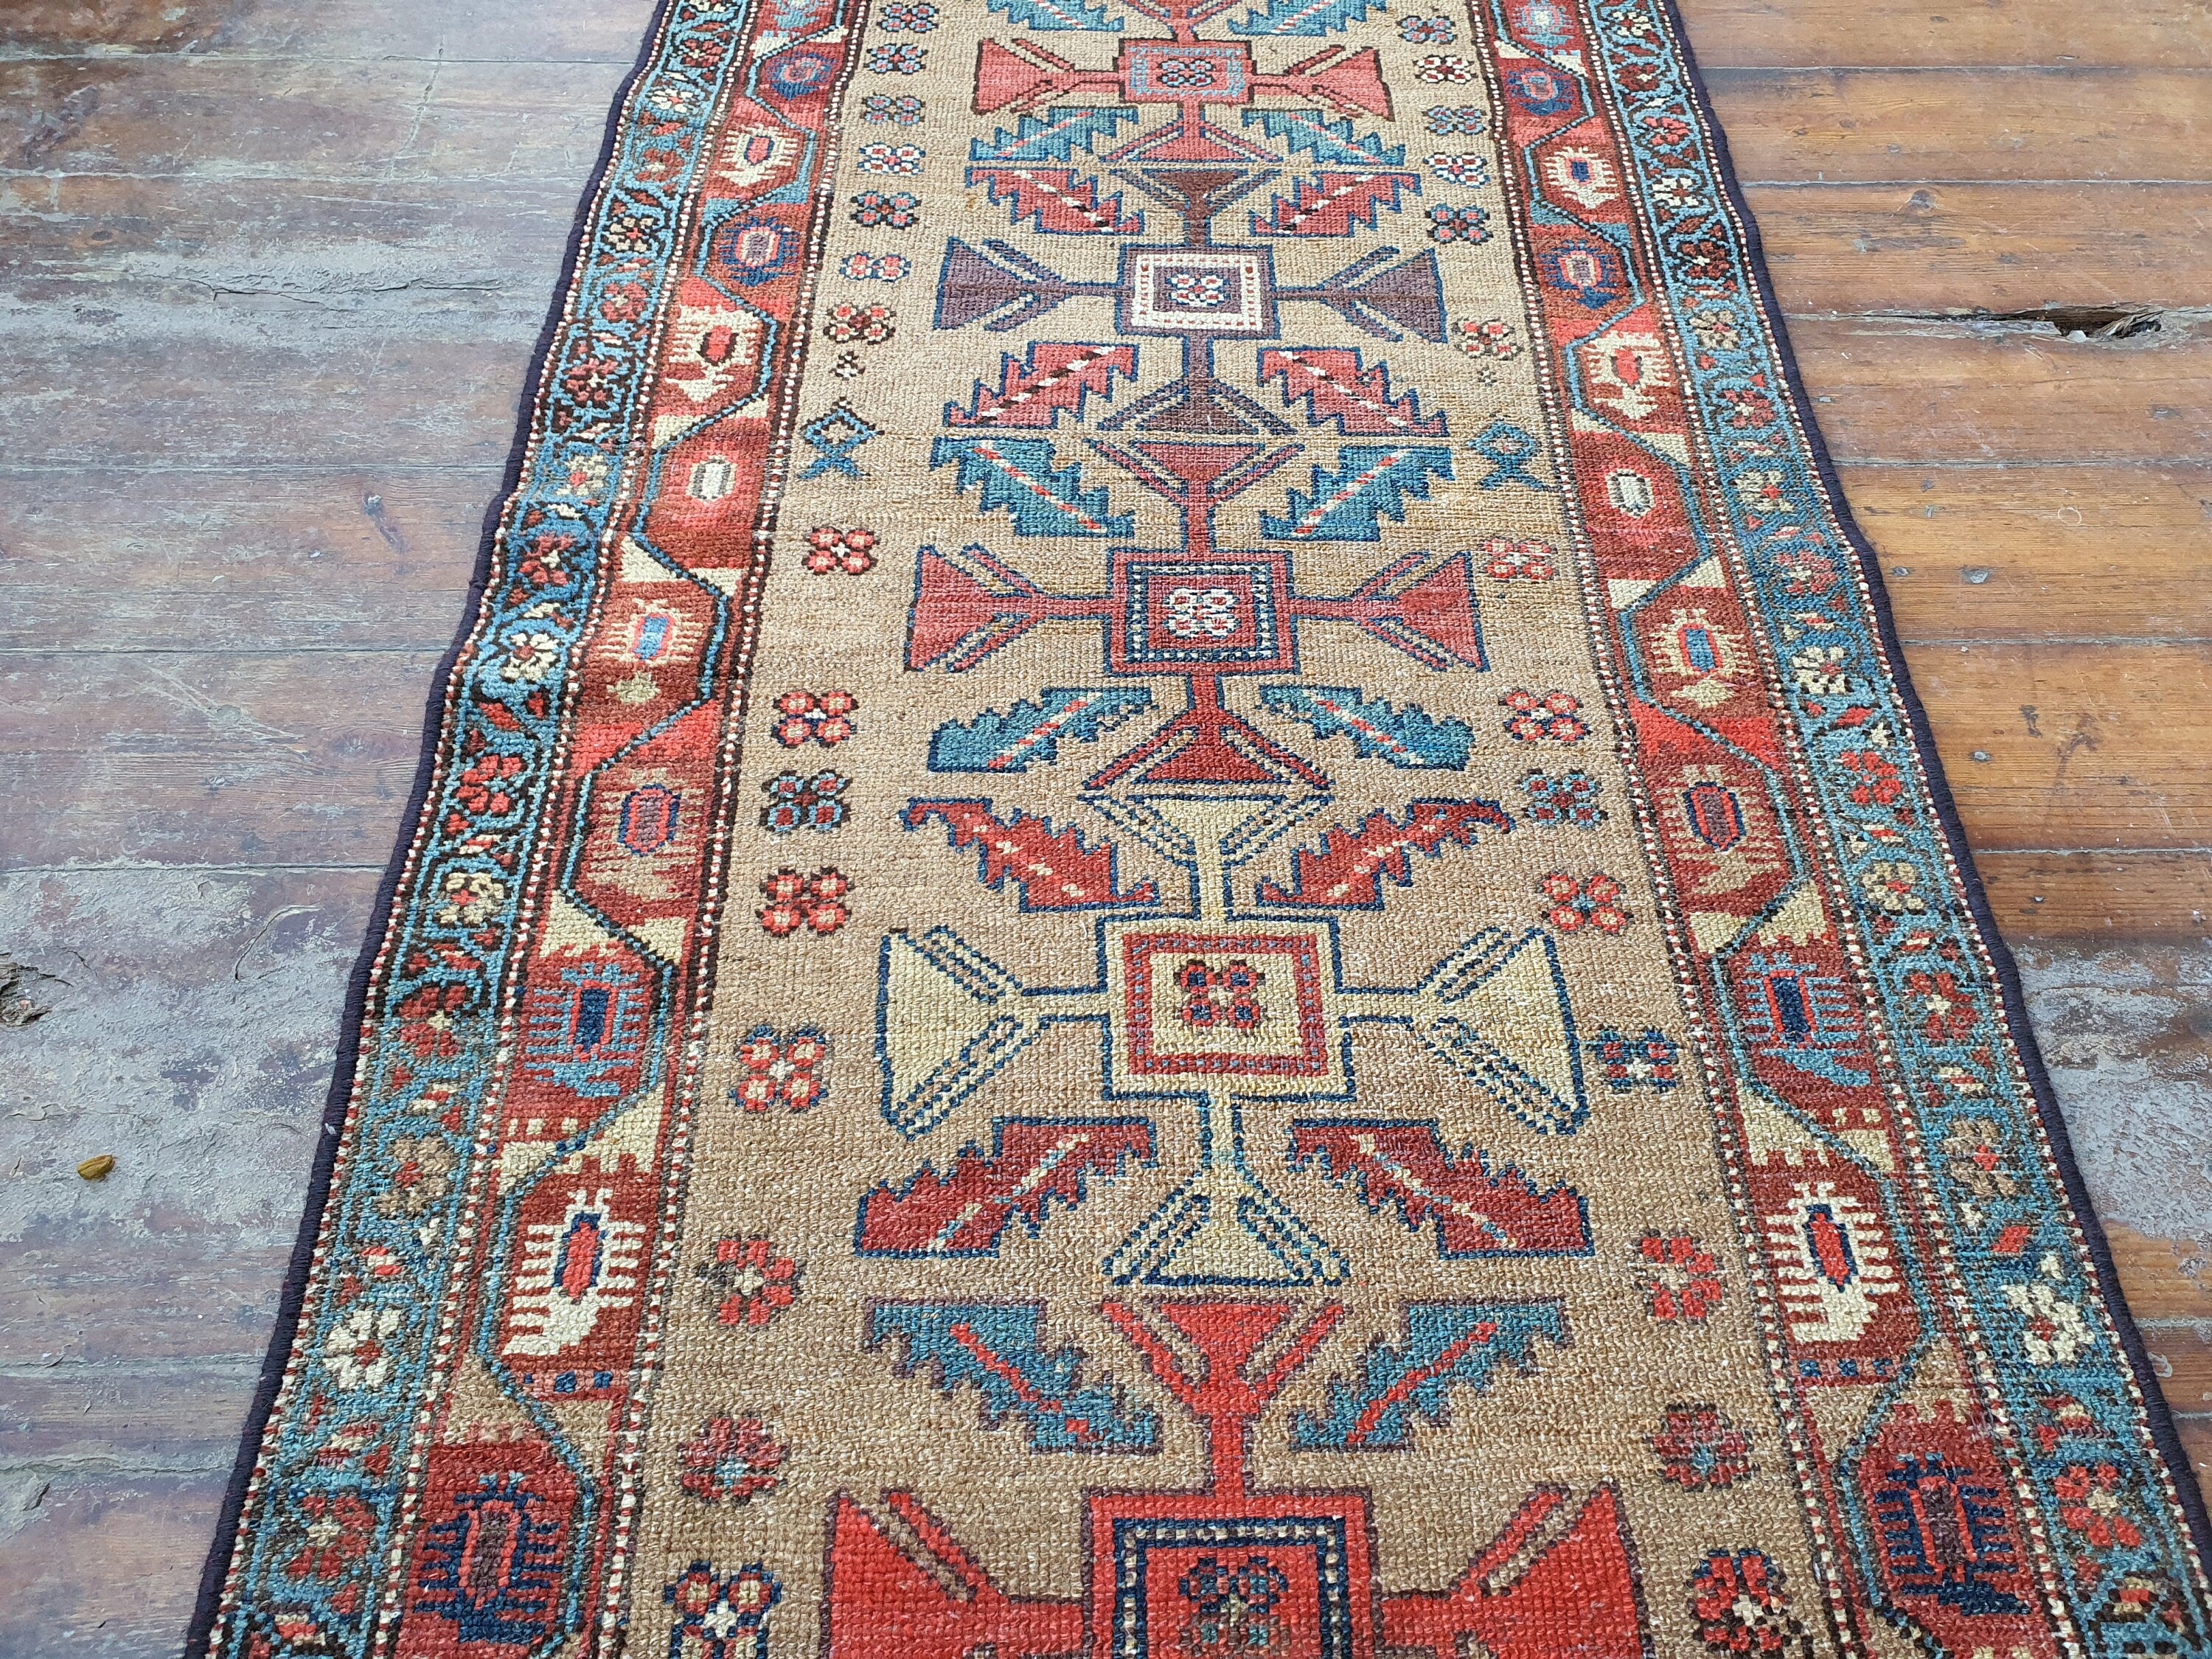 Antique Persian Hallway Rug 9 x 3 ft, Red Blue White Oriental Organic Wool Recycled Runner Rug, Bohemian Rustic Decor Vintage Oriental Rug